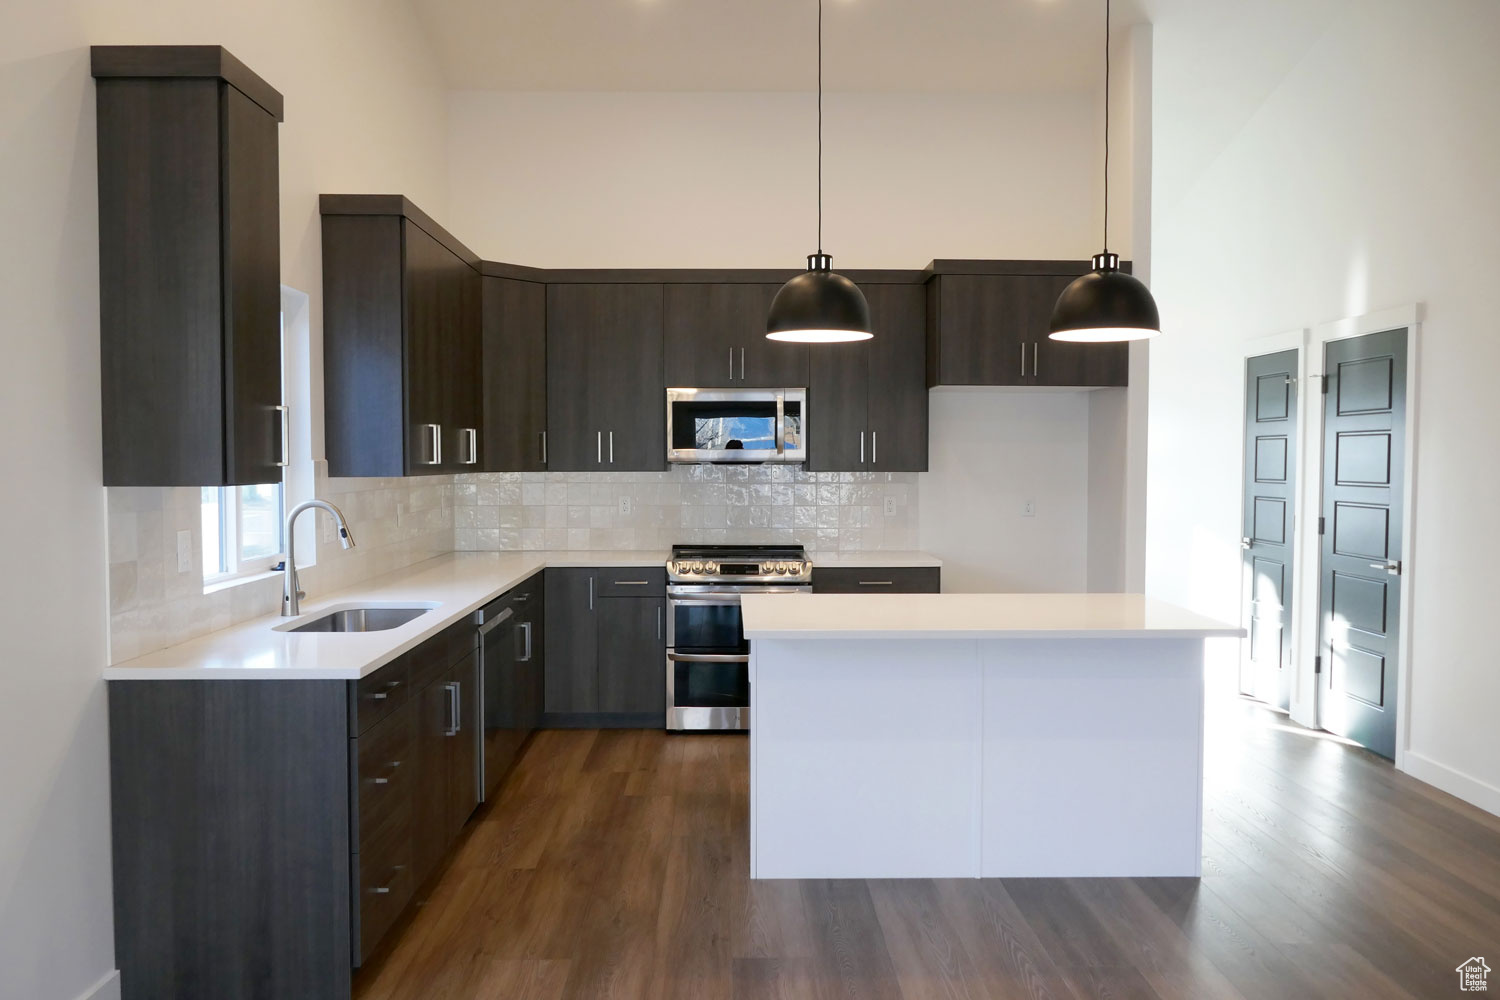 Kitchen featuring dark hardwood / wood-style flooring, stainless steel appliances, tasteful backsplash, hanging light fixtures, and sink